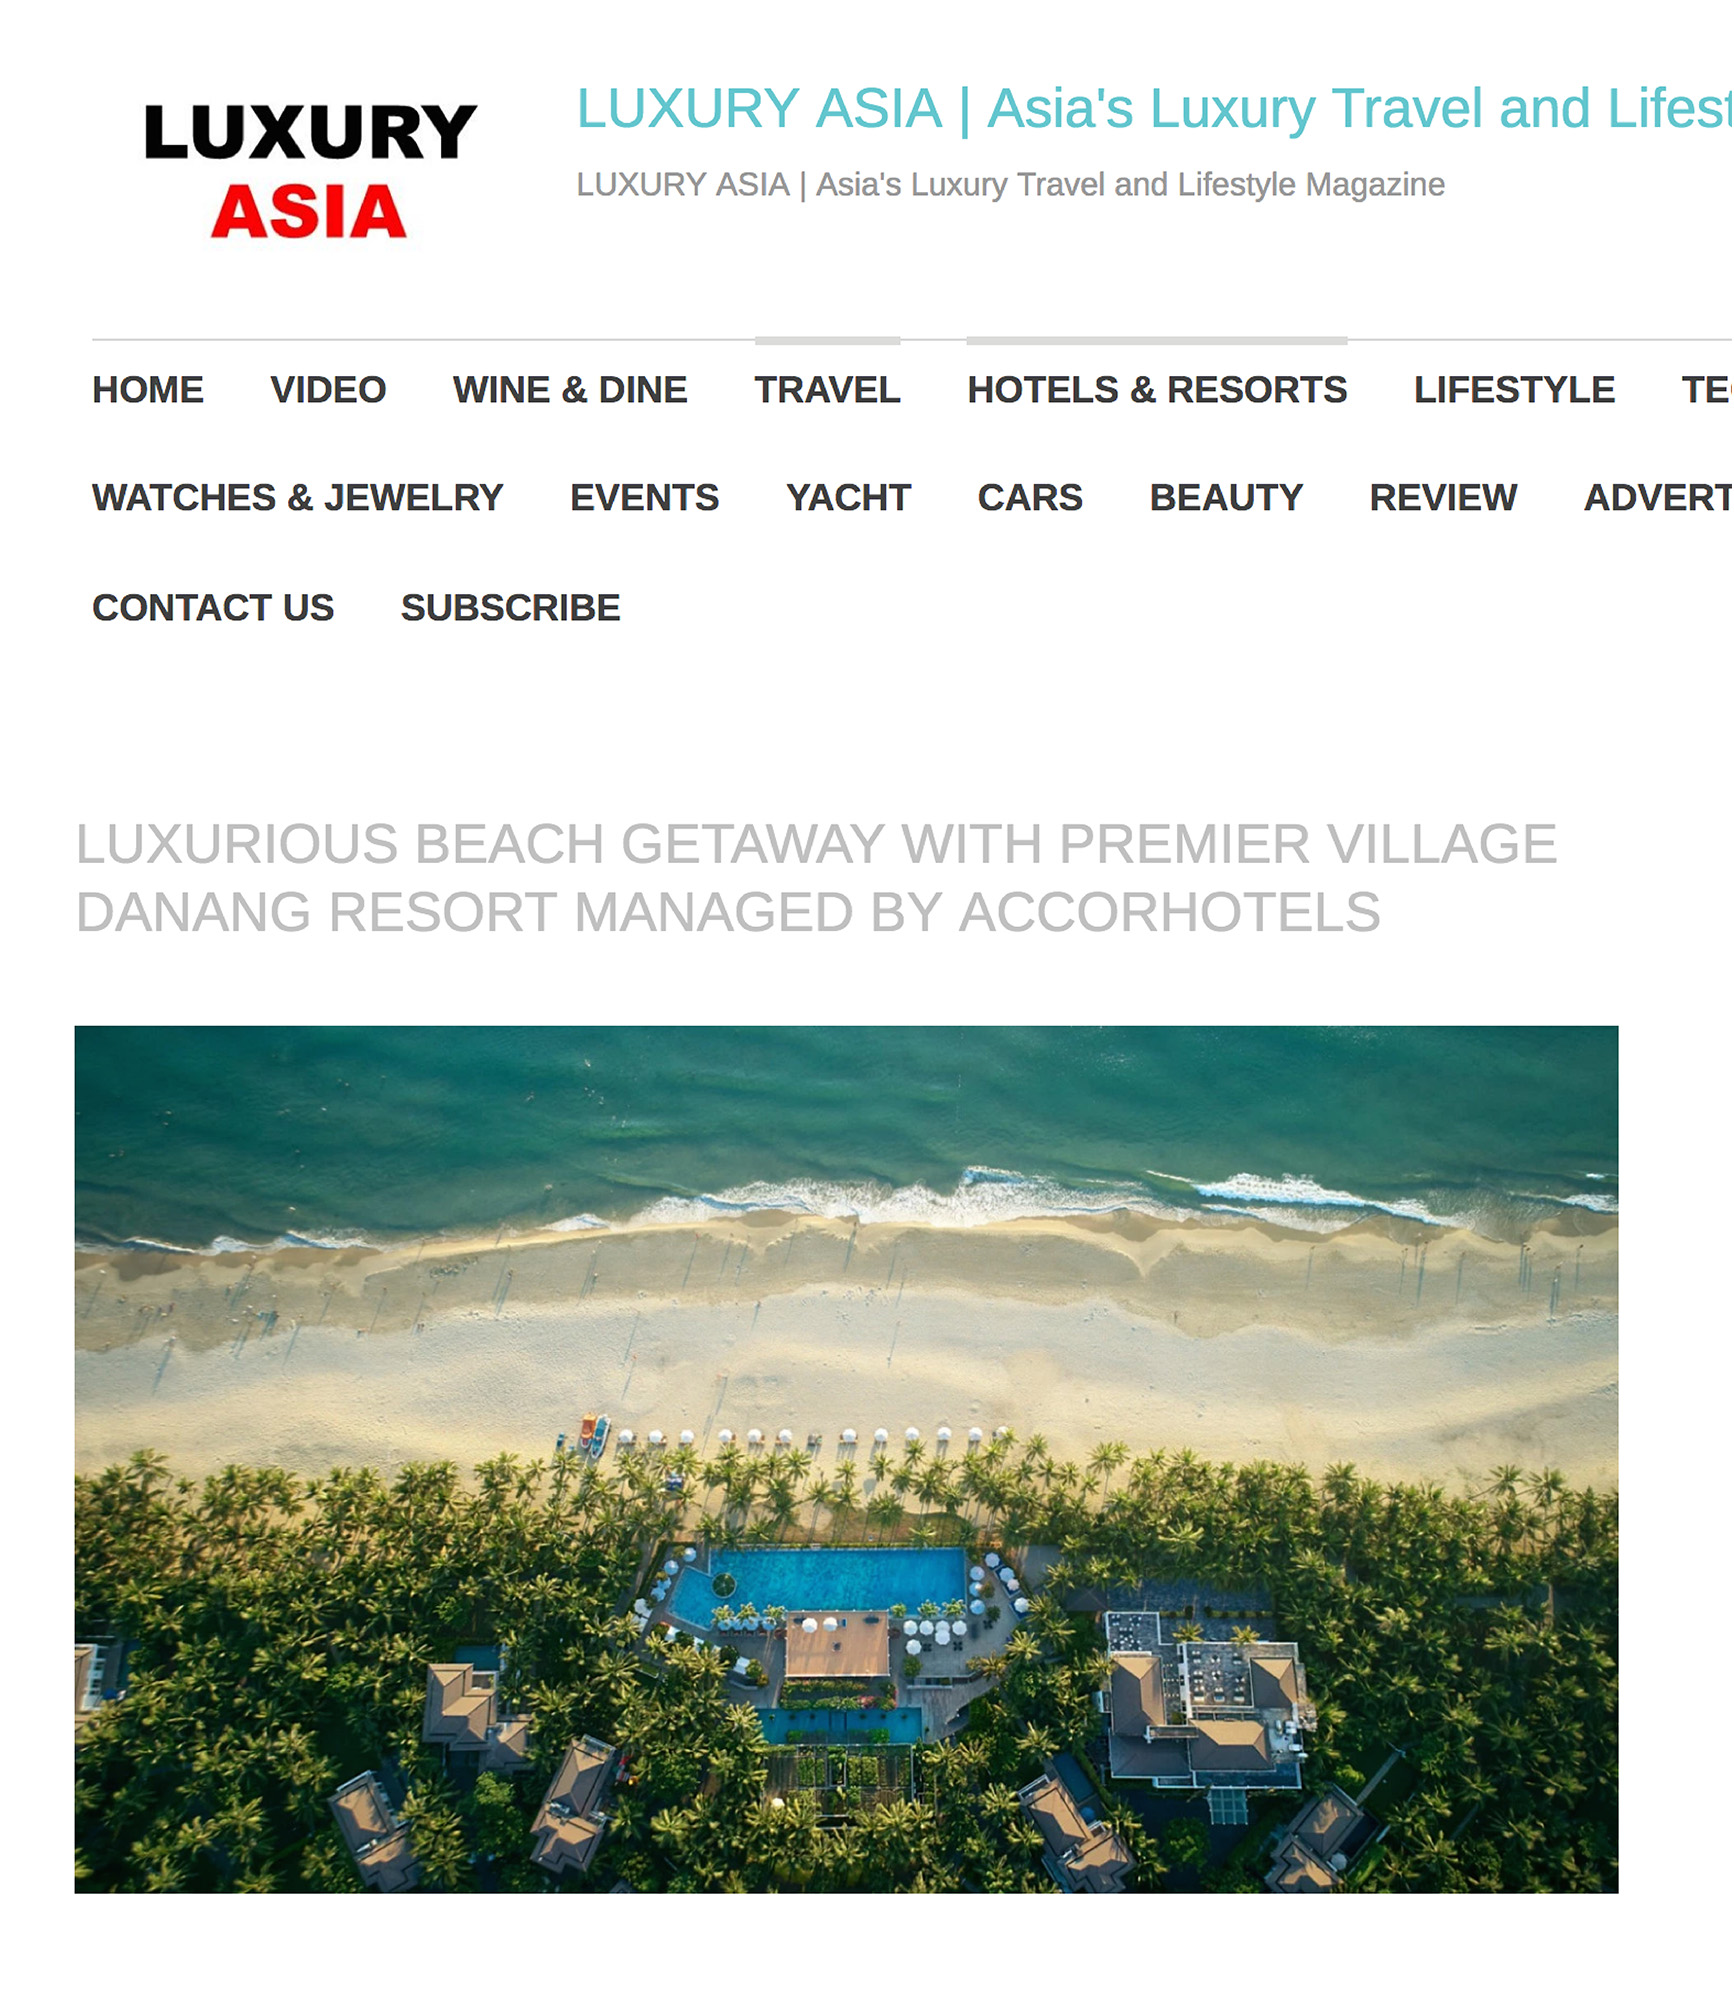 LuxuryAsiaInsider-01-premier village danang-coco pr-singapore-public relations-media coverage- features-communications